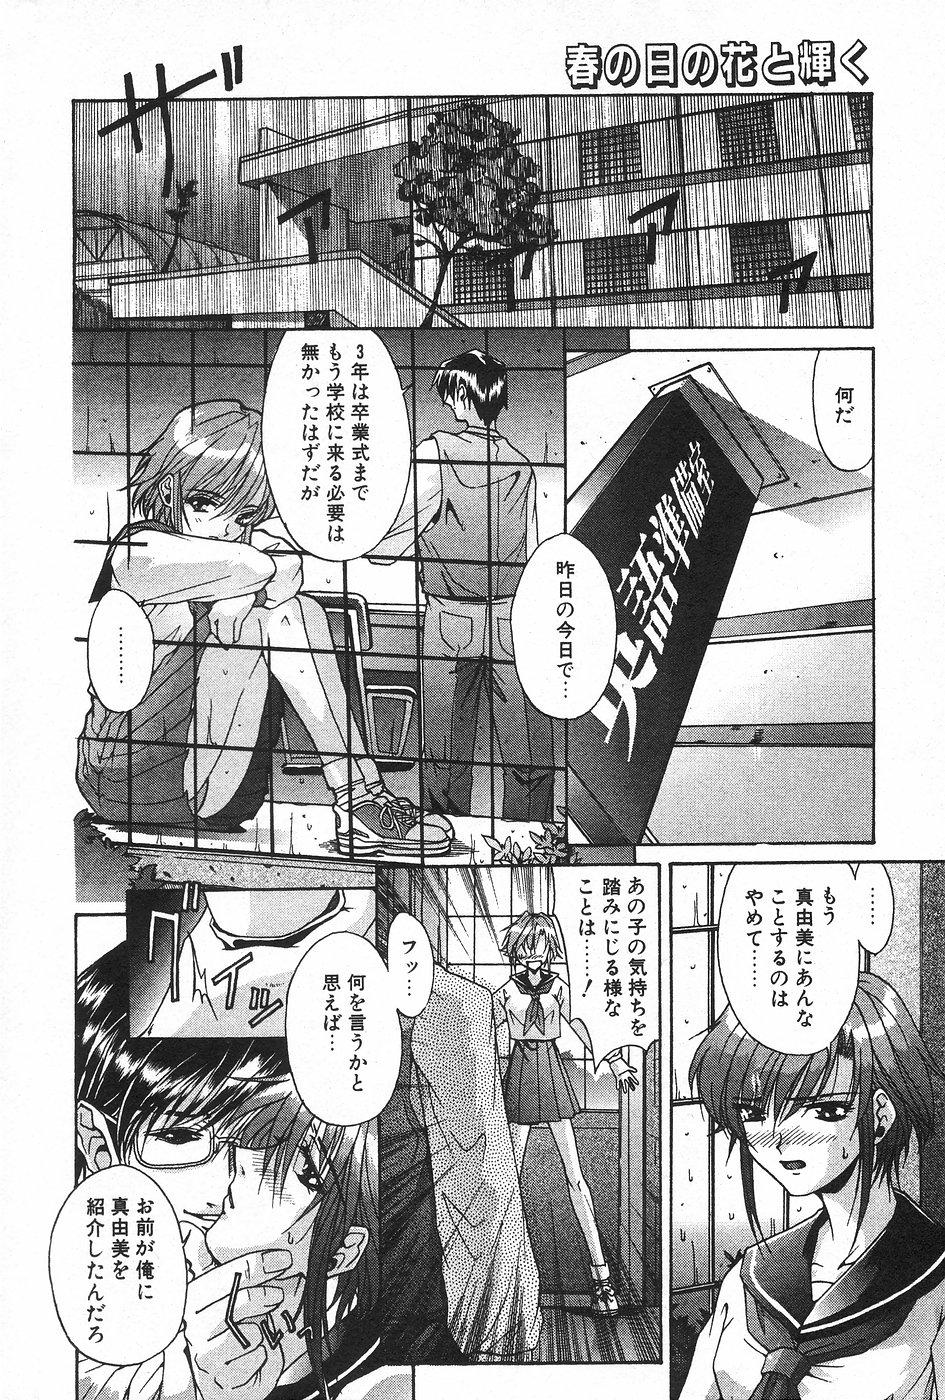 Manga Hotmilk 1997-04 27